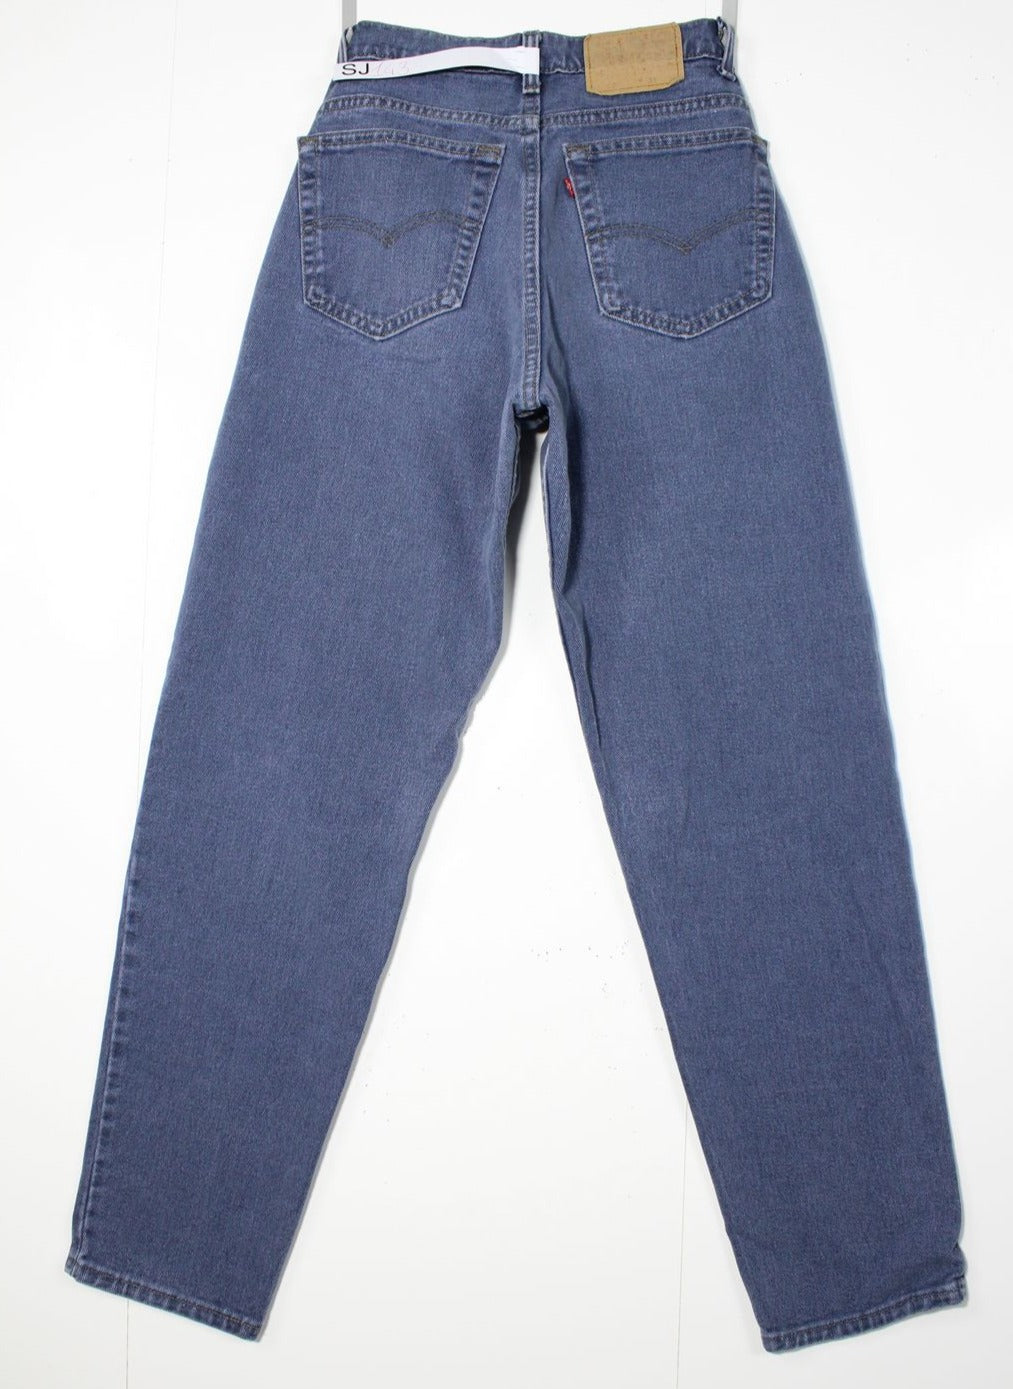 Levi's 550 W33 L32 Denim Made In USA Jeans Vintage